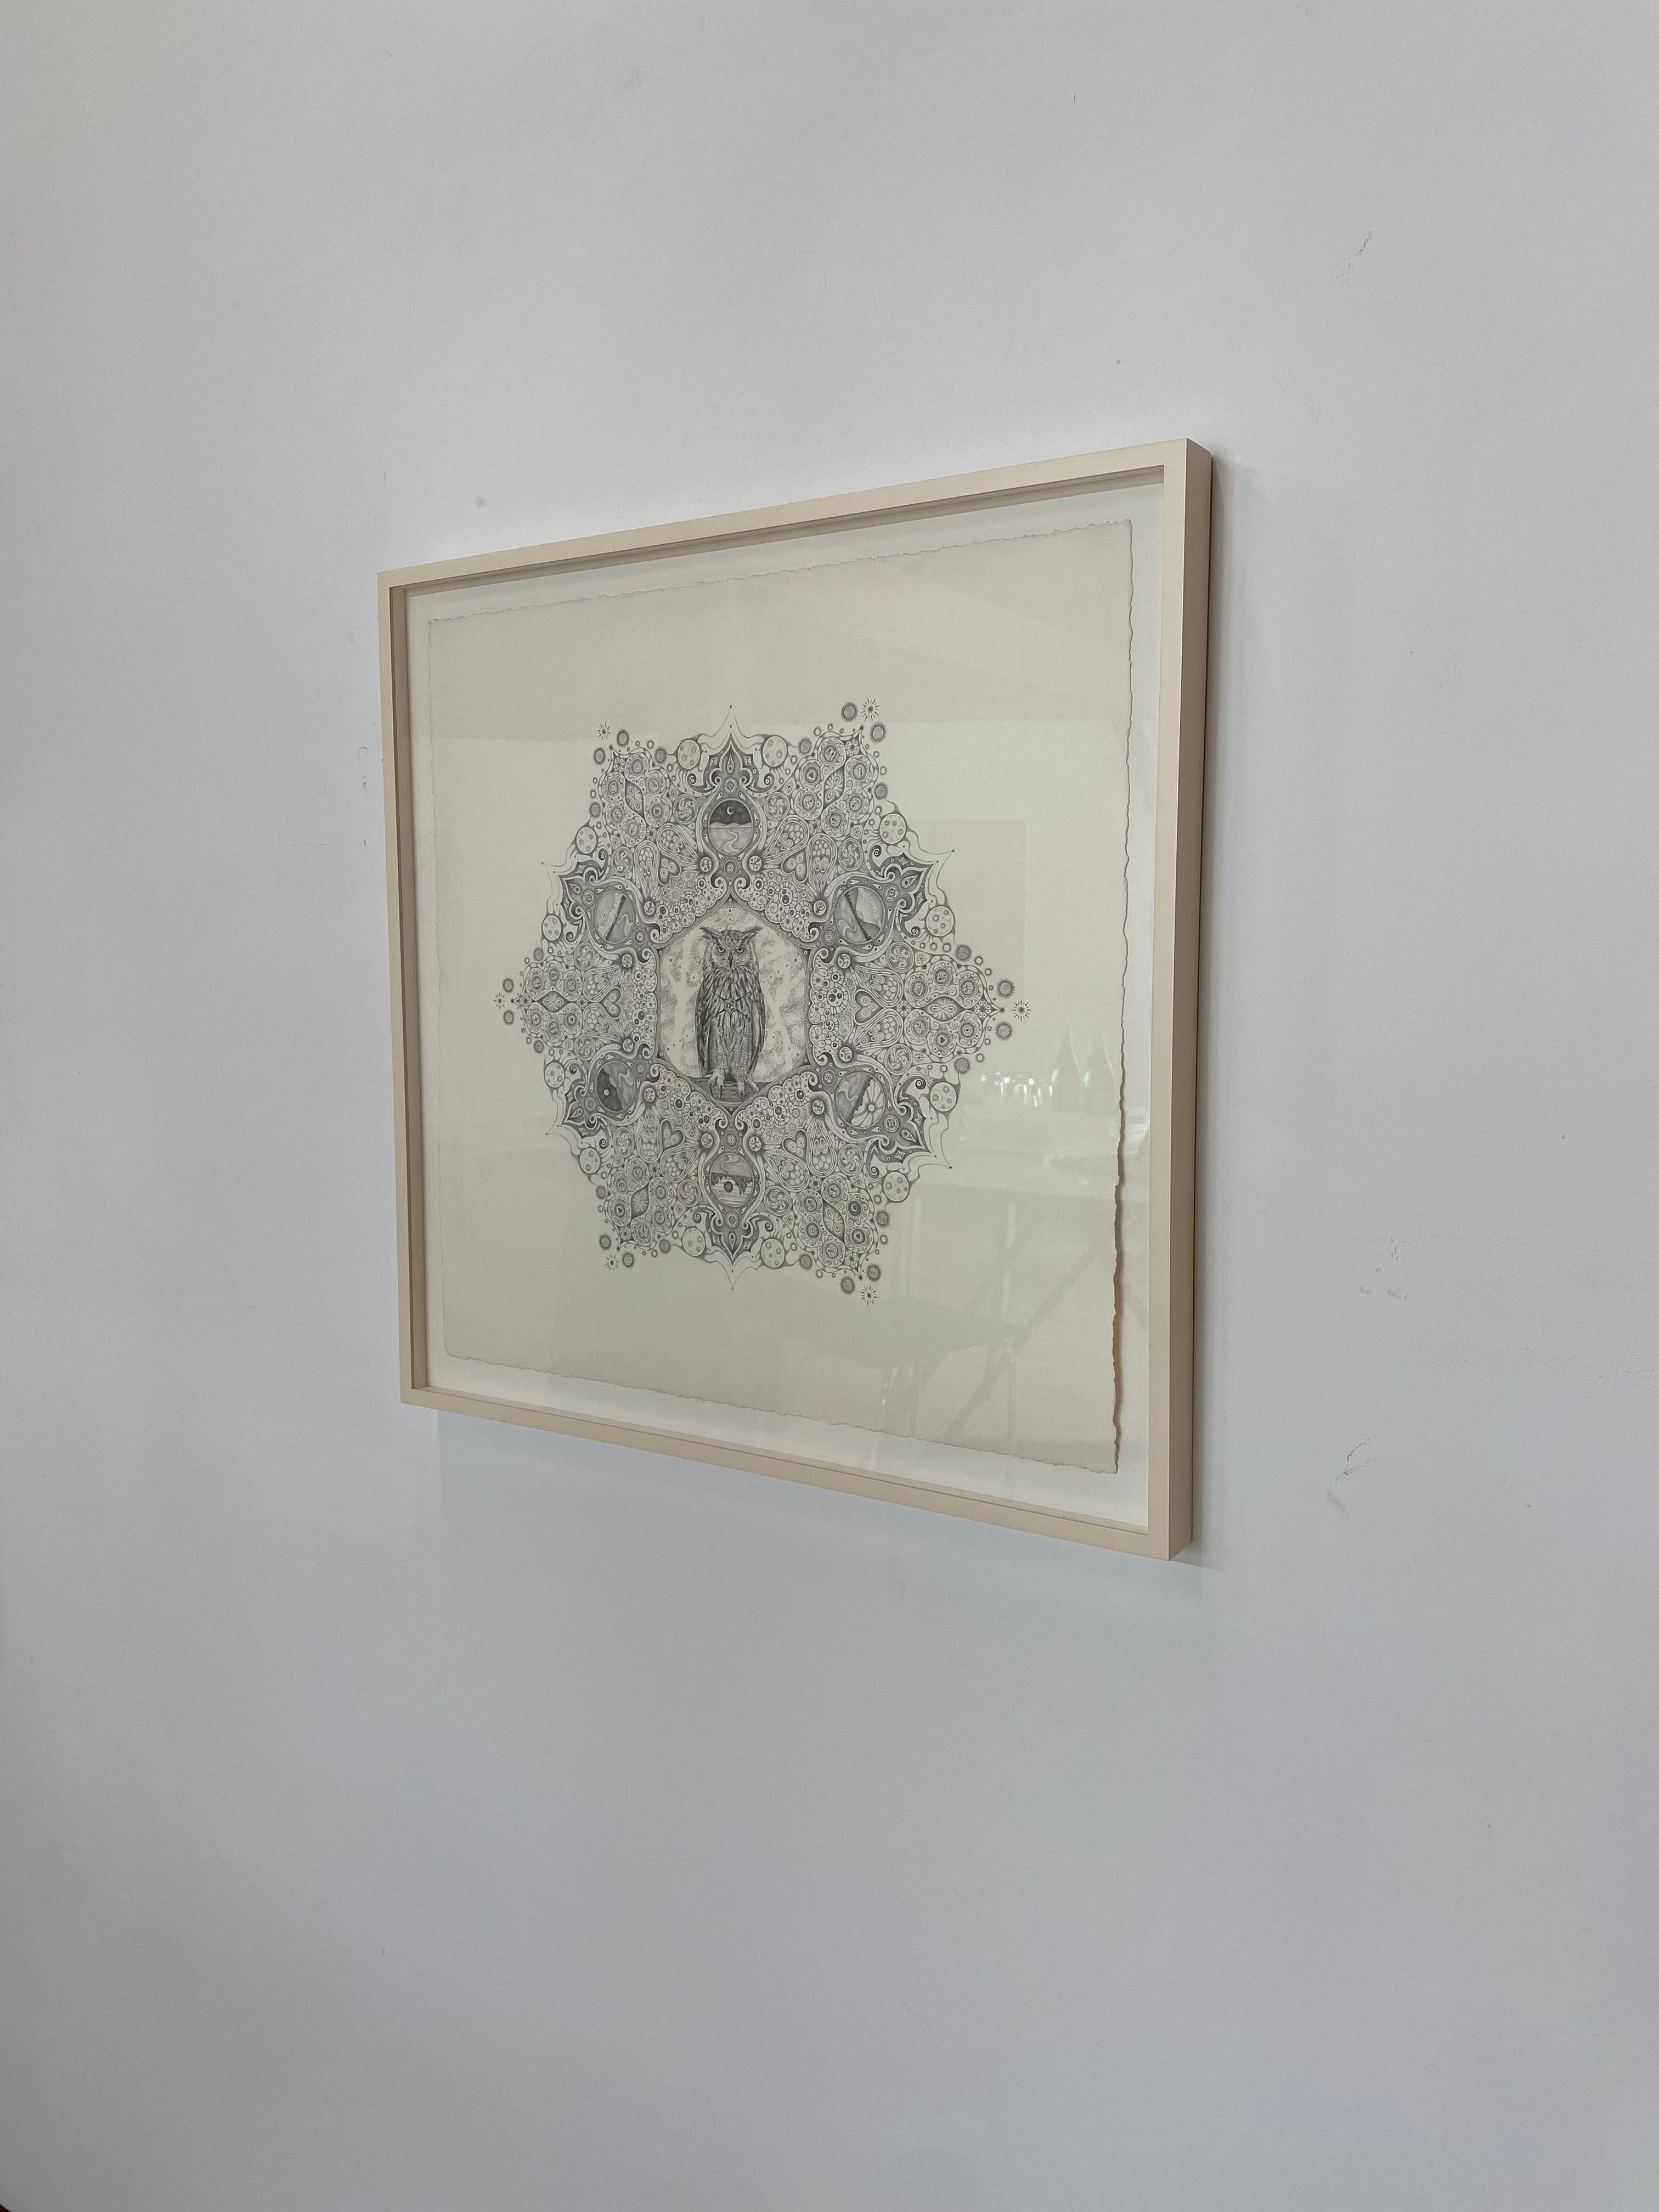 Snowflakes 84 Forester, Mandala Pencil Drawing, Owl, Cosmic Imagery, Landscapes - Art by Michiyo Ihara